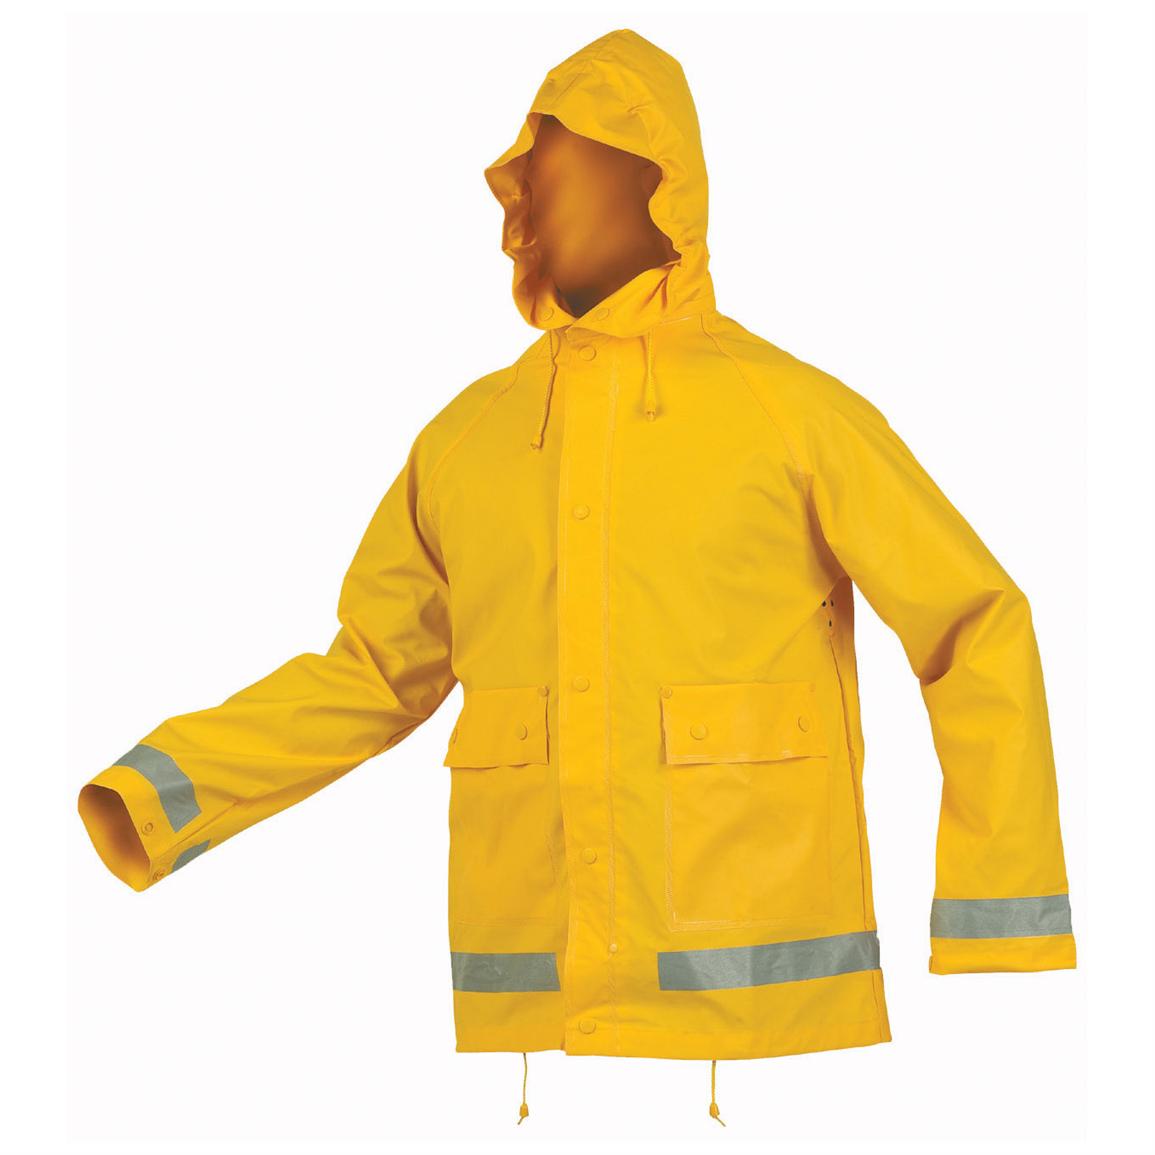 Storm Jacket with Reflective Tape Yellow - 115991 Rain Jackets